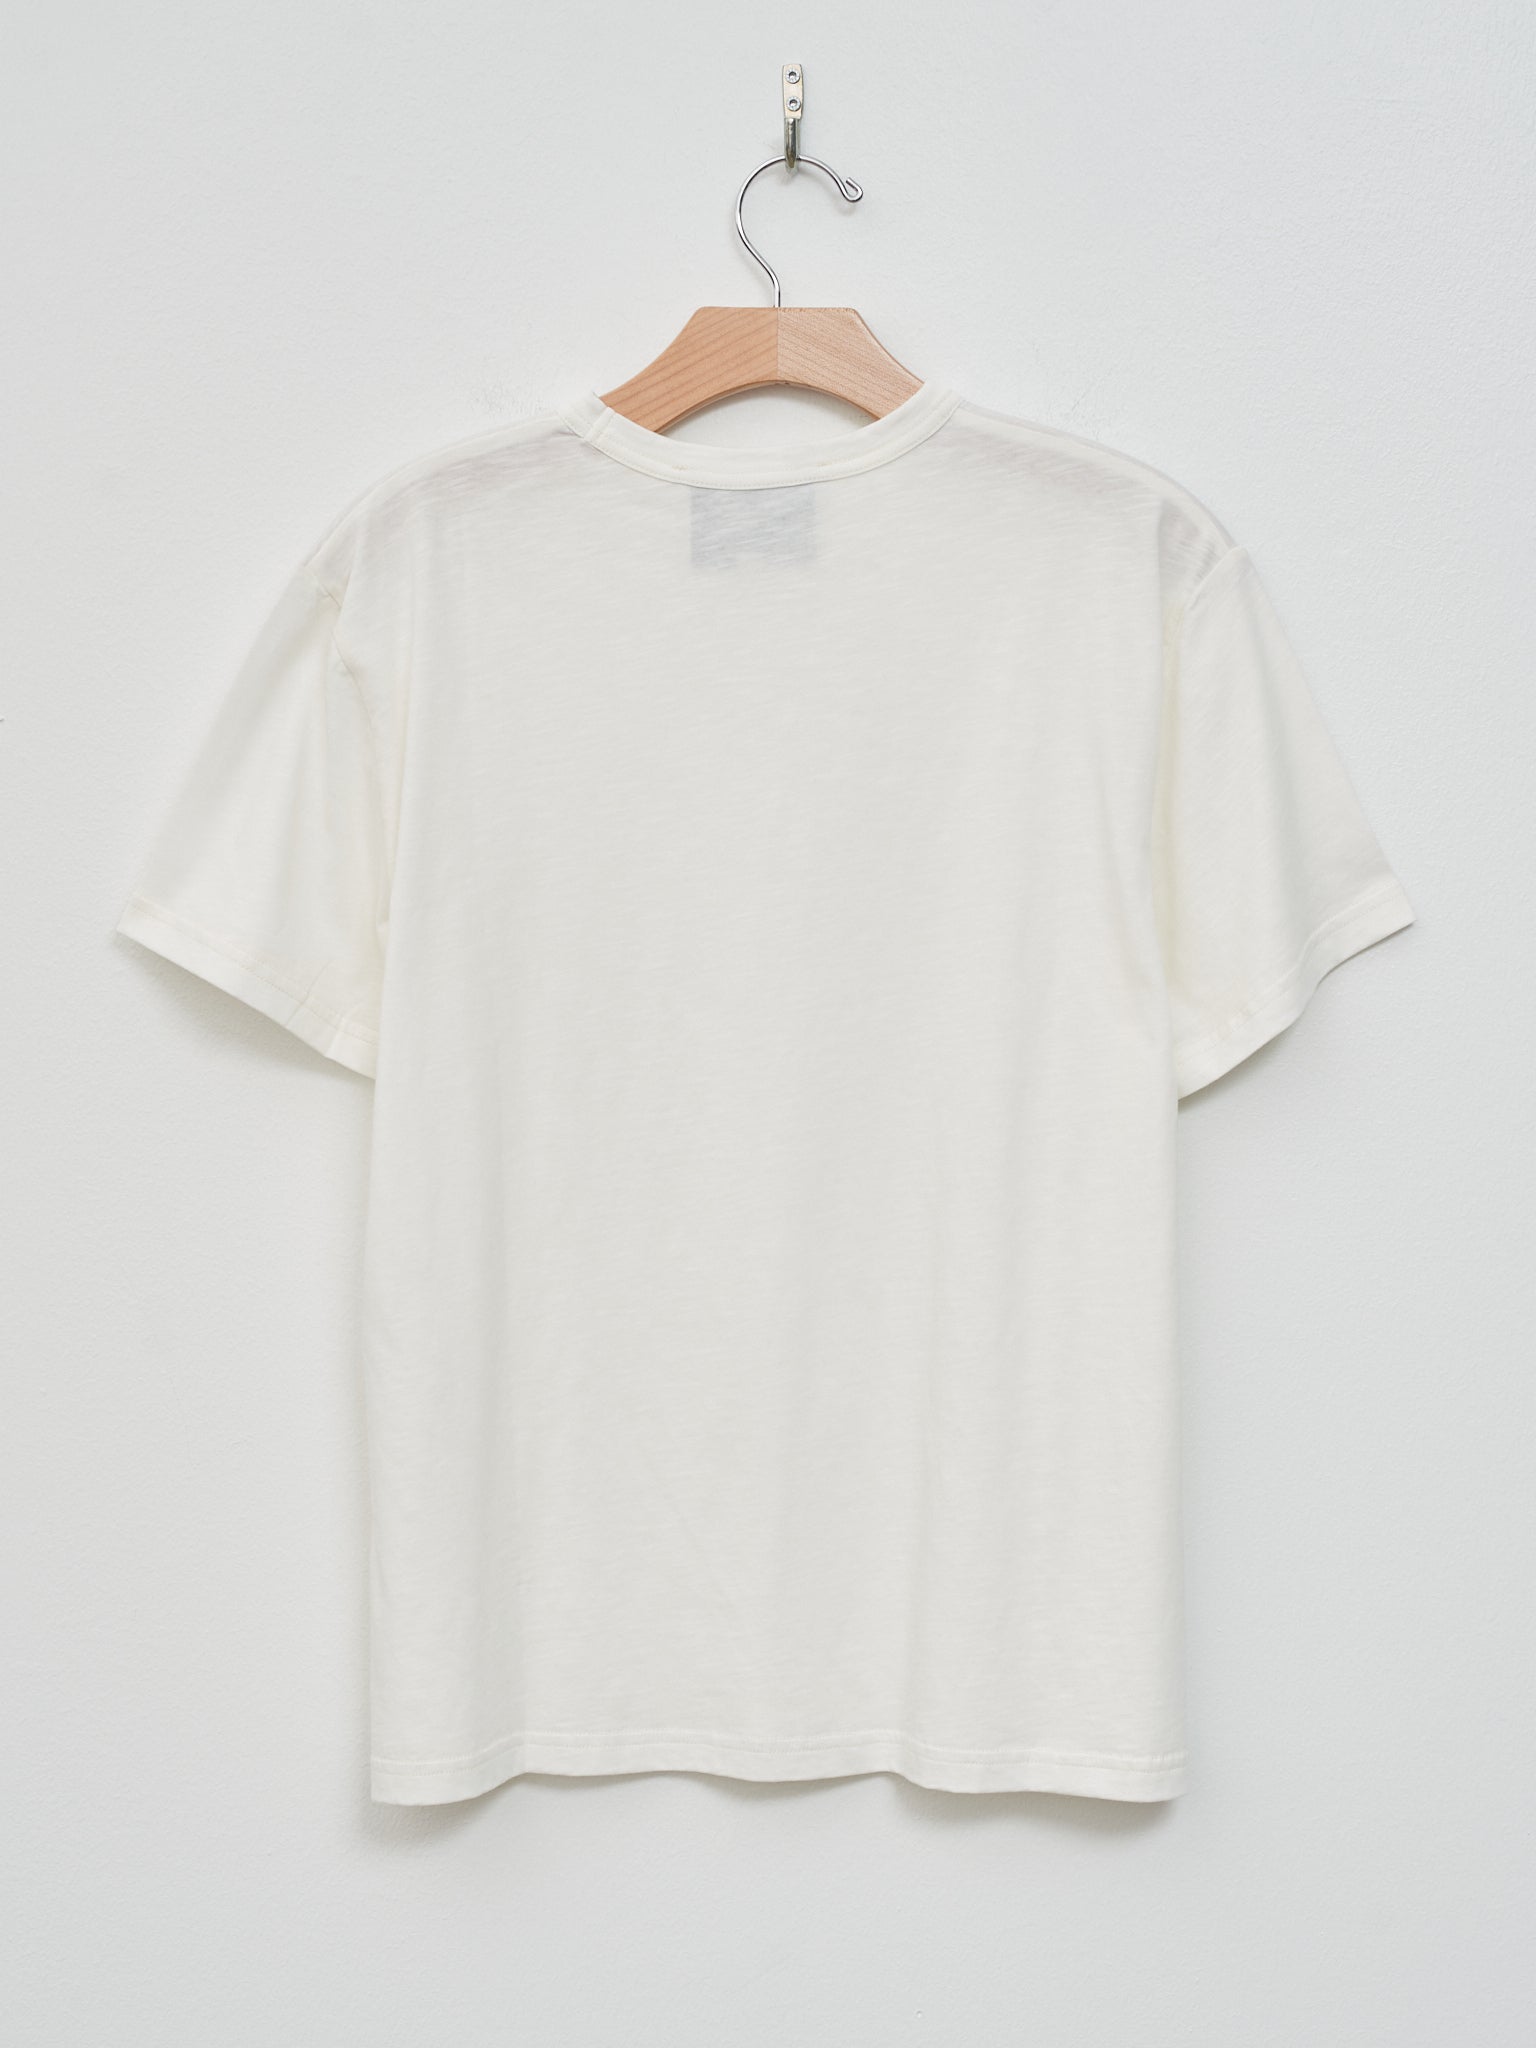 Namu Shop - Studio Nicholson Tshirt - Parchment